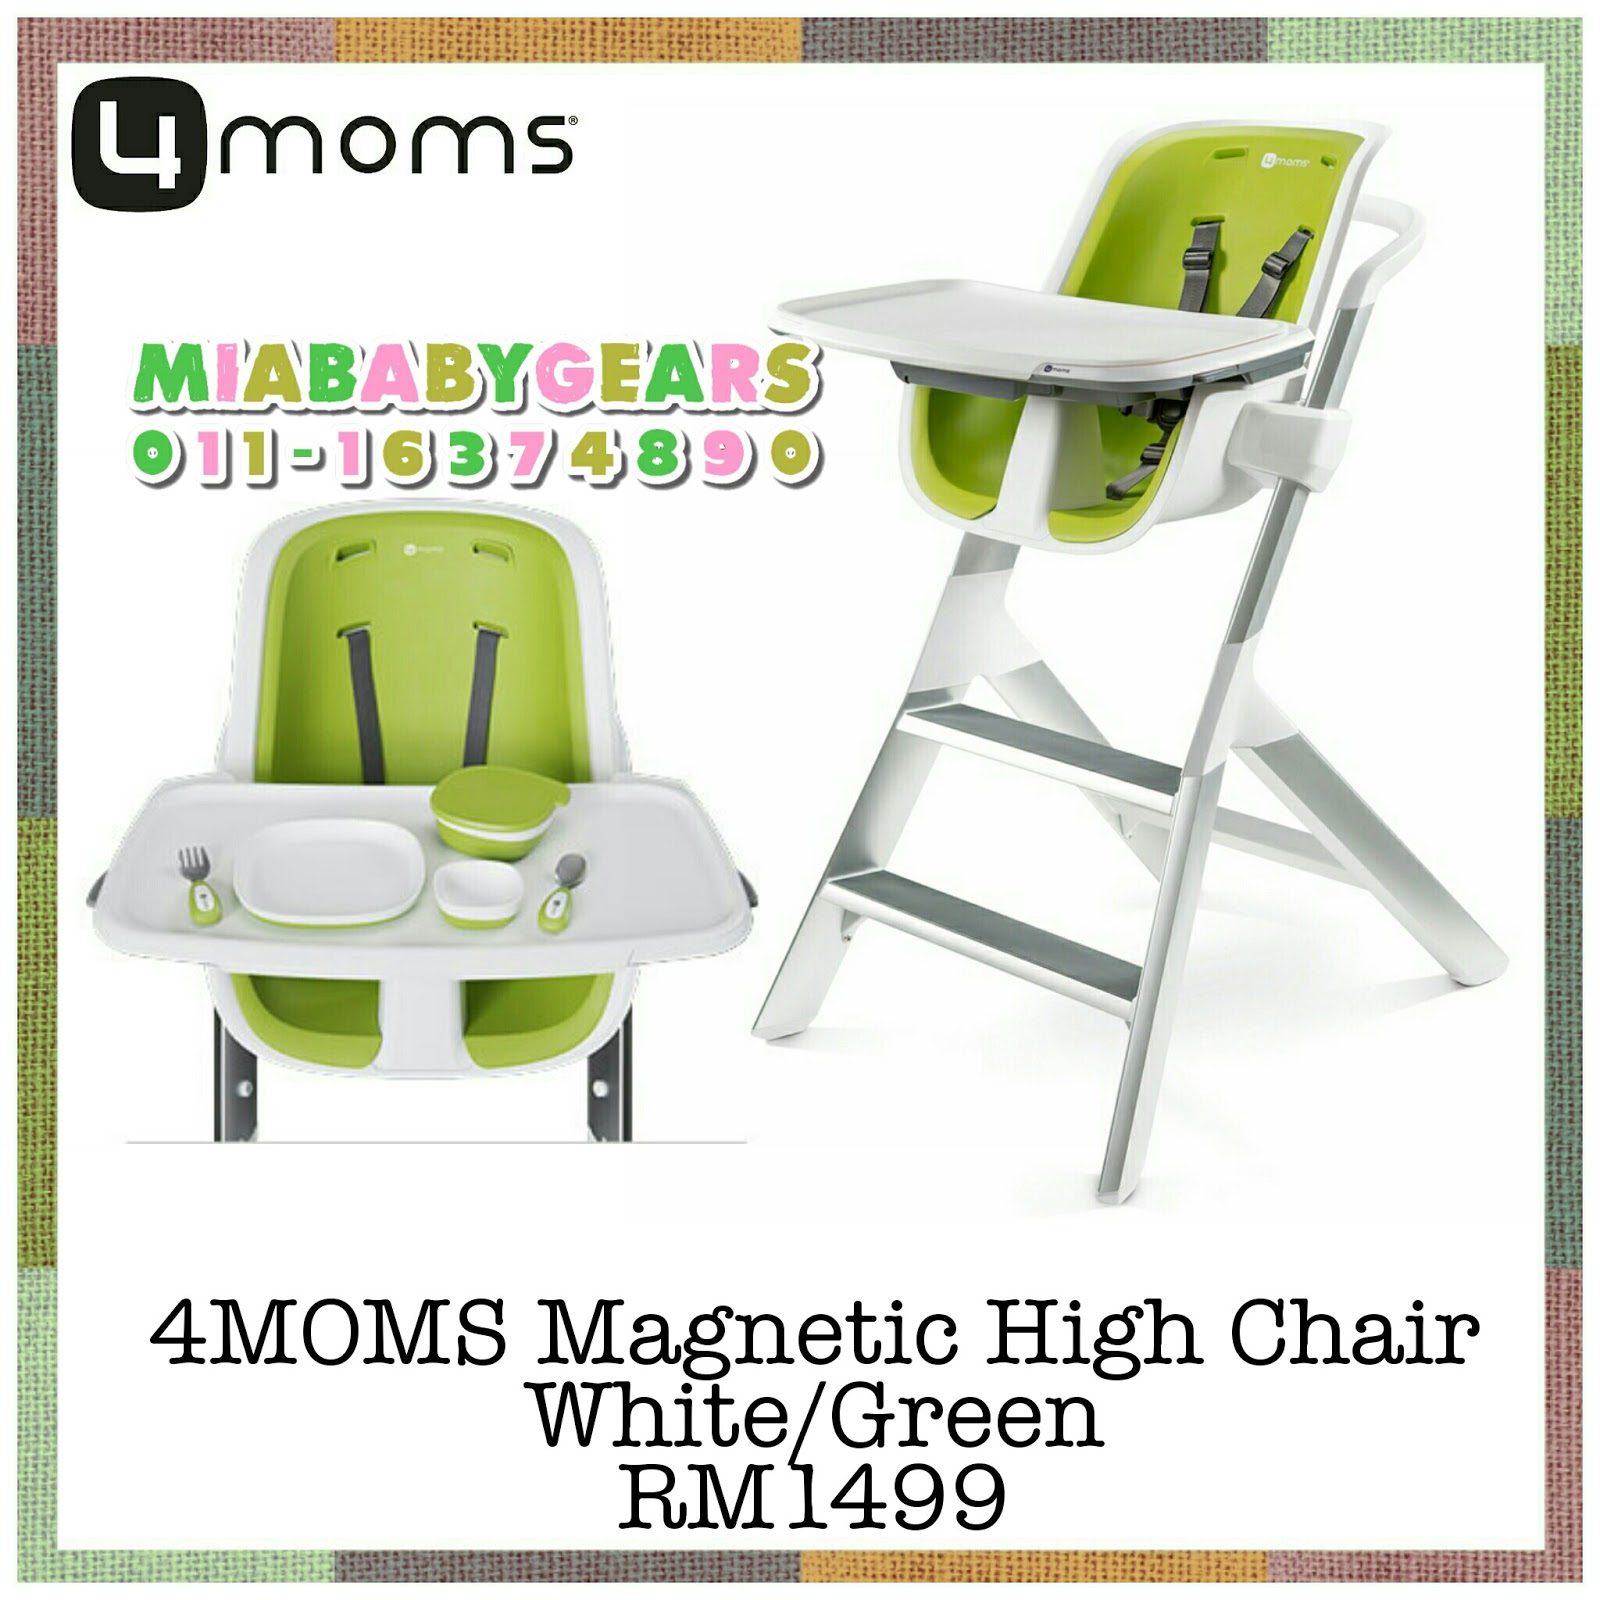 Mia Babygears 4moms High Chair